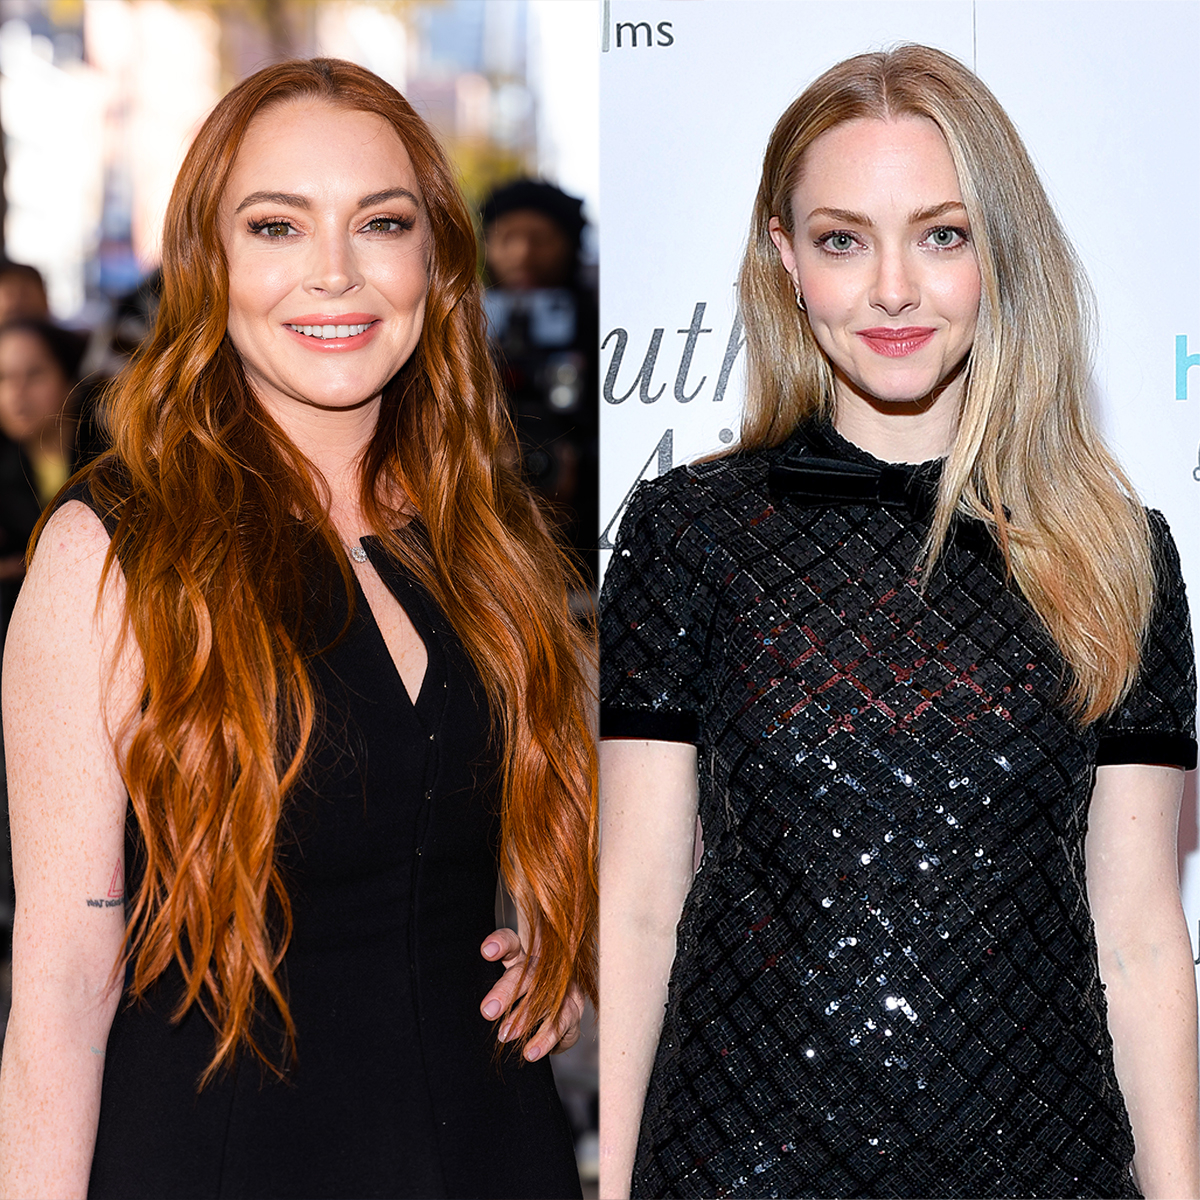 Mean Girls' reunion commercial stars Lindsay Lohan, Amanda Seyfried